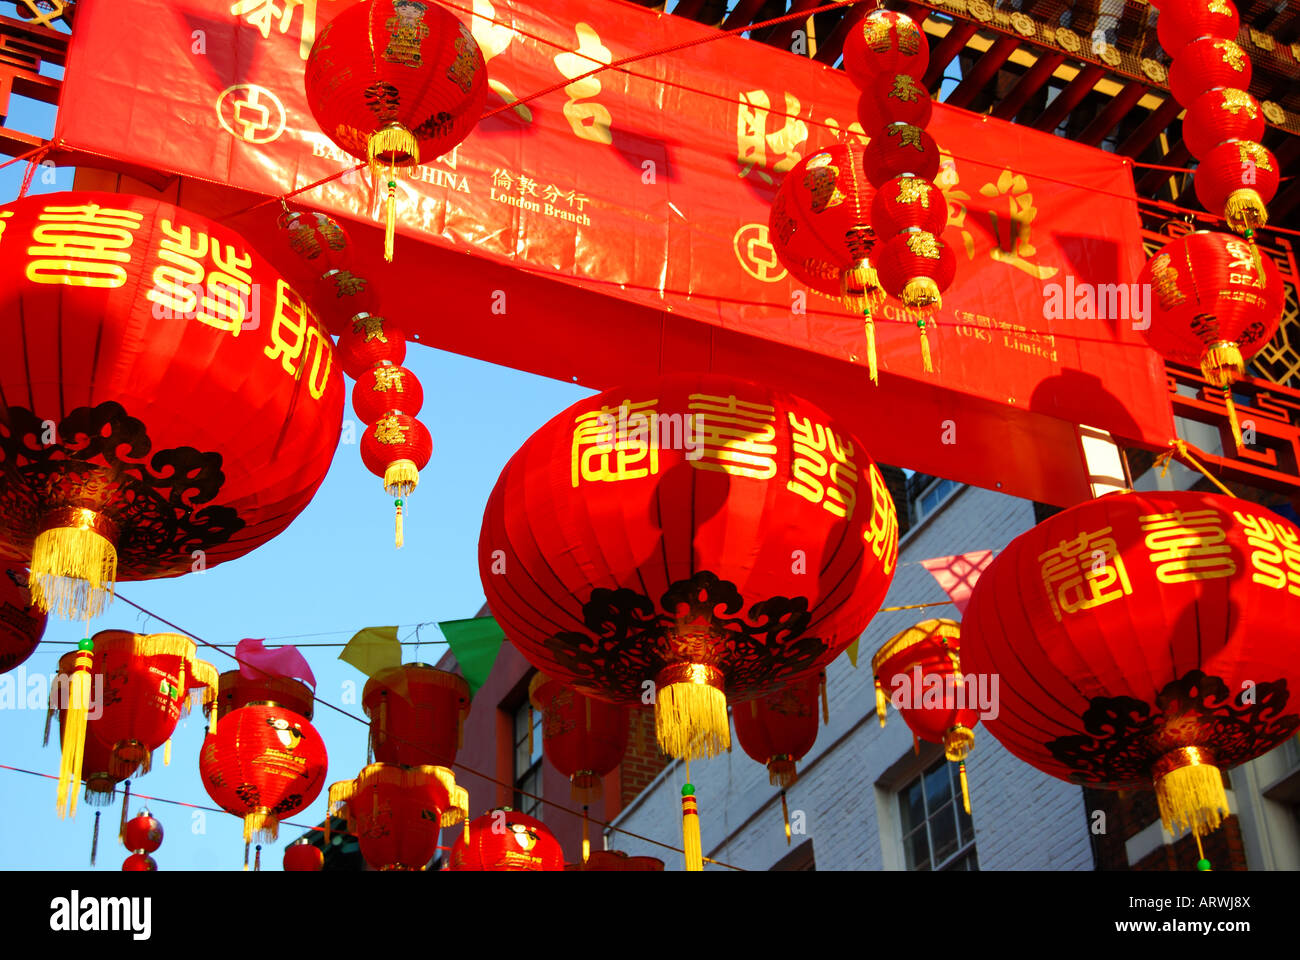 Décorations du Nouvel An chinois, Chinatown, Soho, West End, Londres, Angleterre, Royaume-Uni Banque D'Images